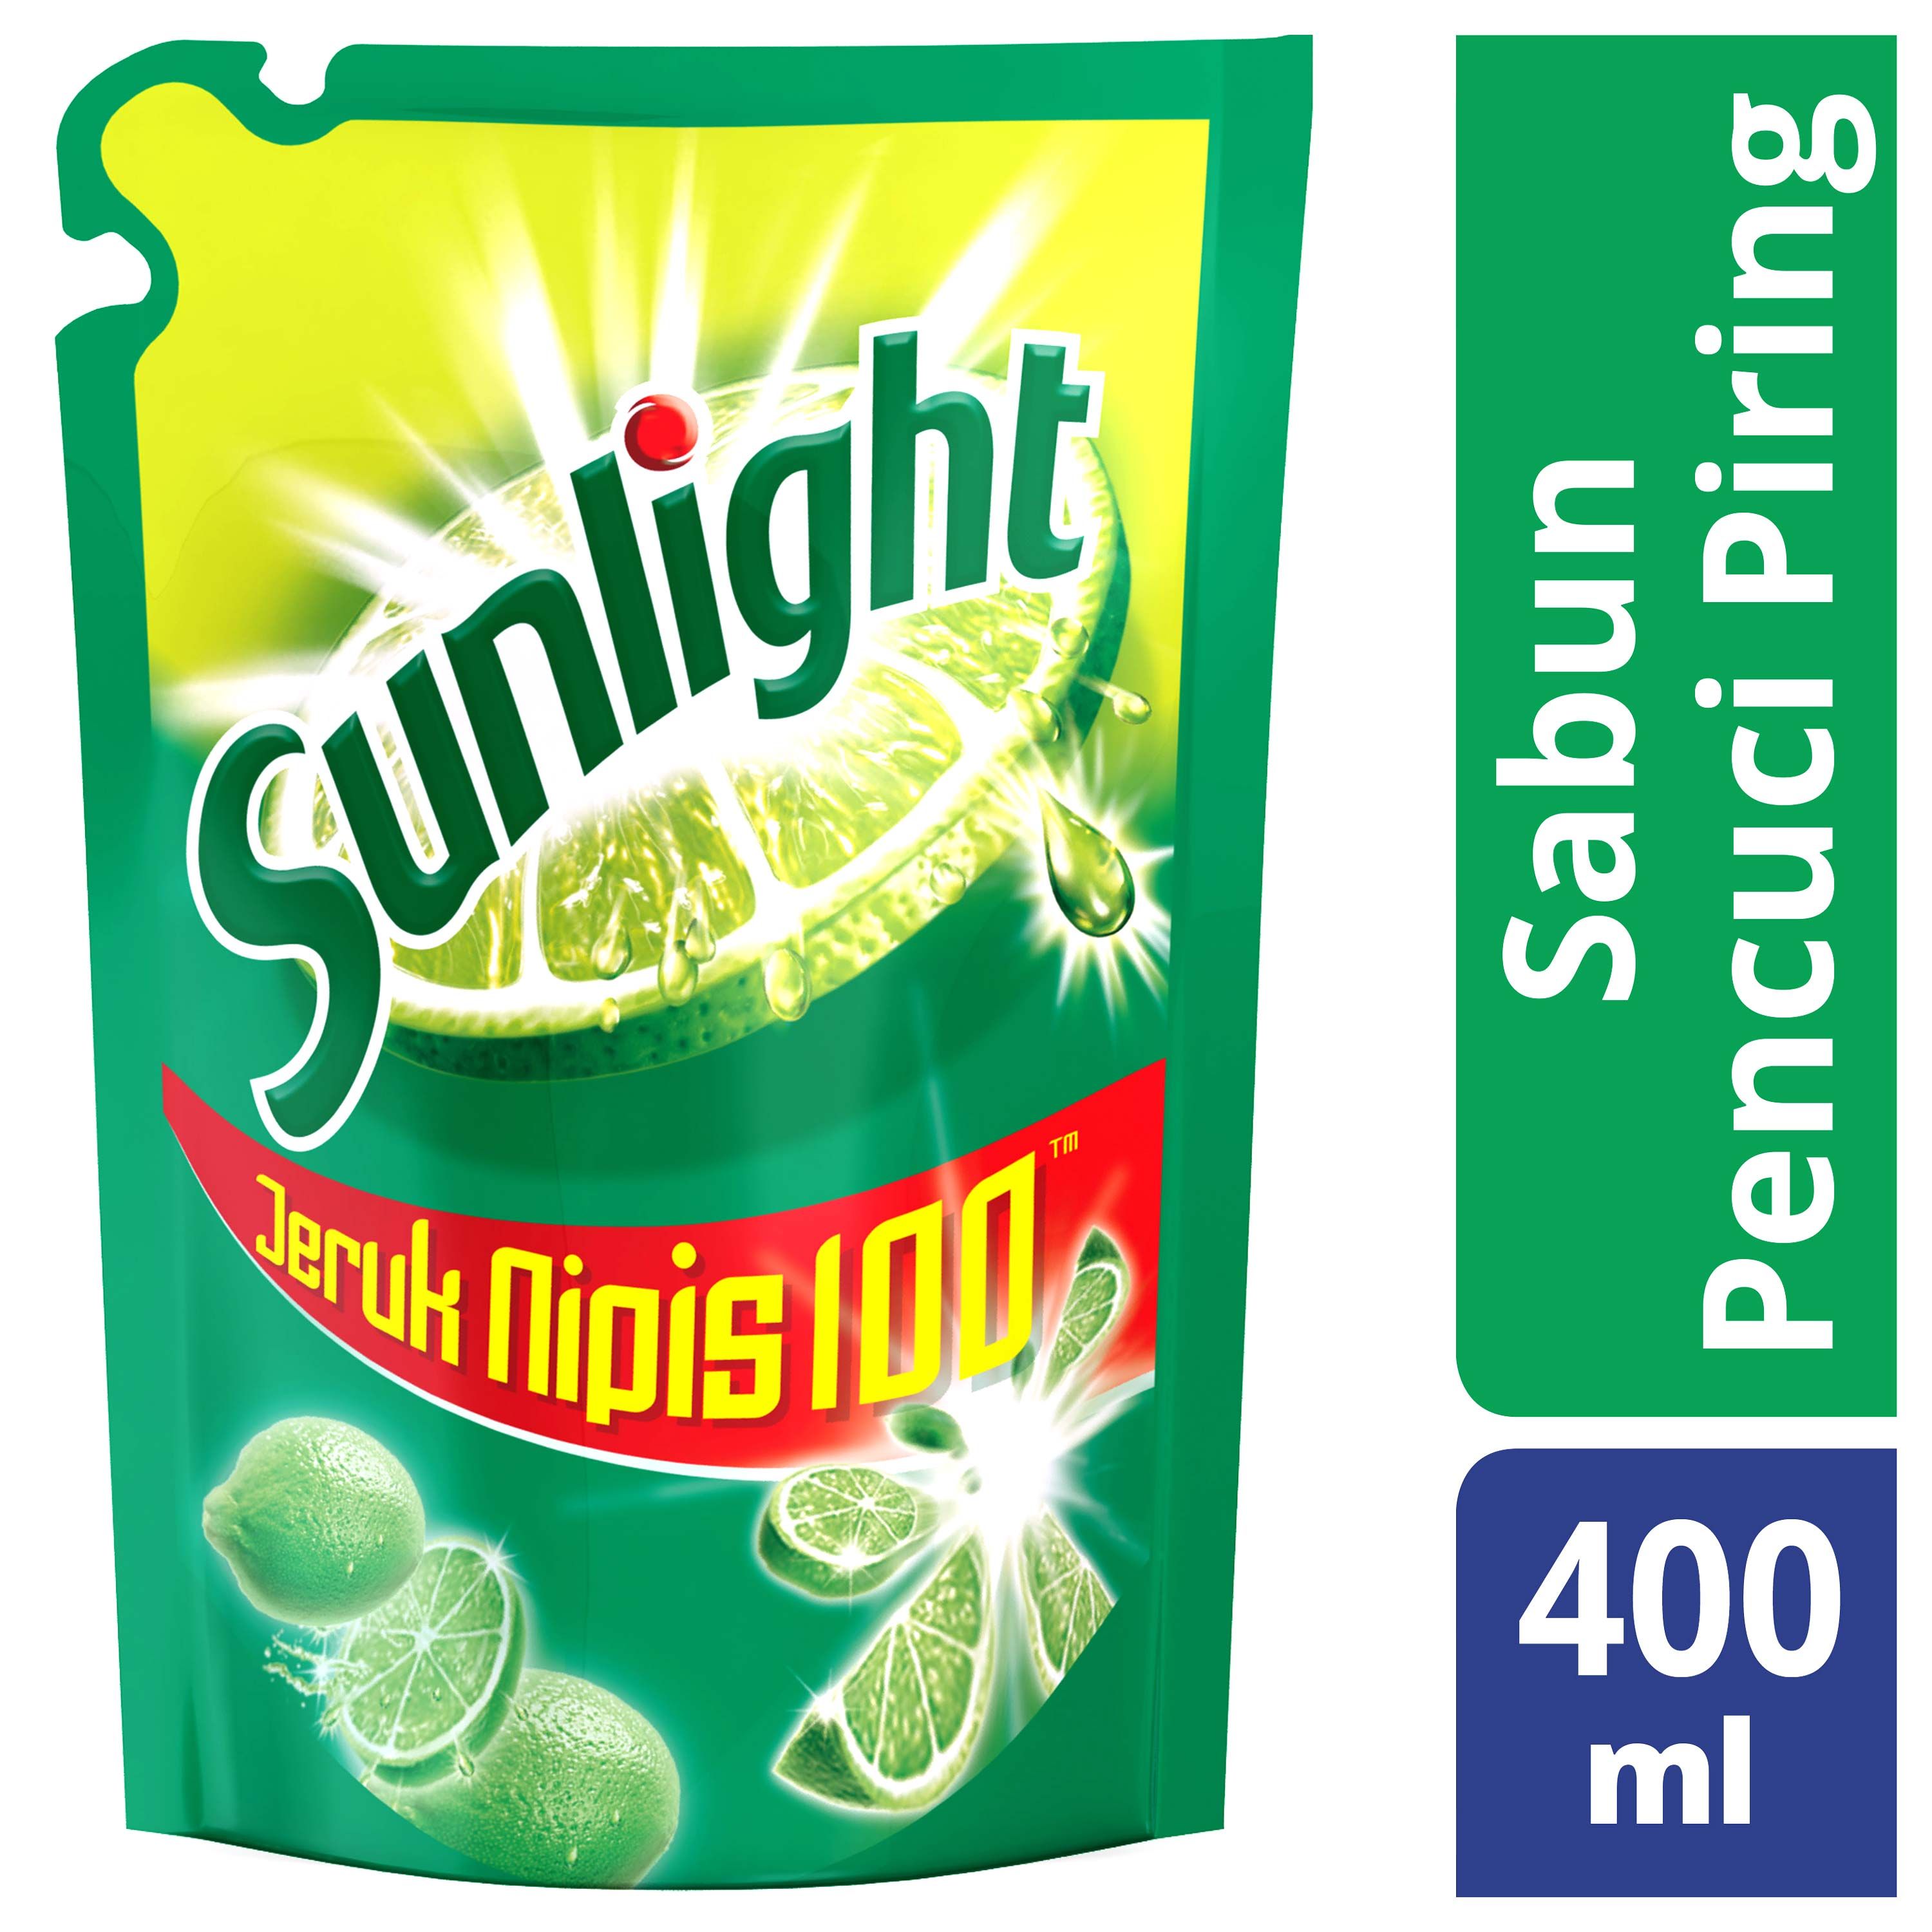 Sunlight Lime Pch (400ml) - 1